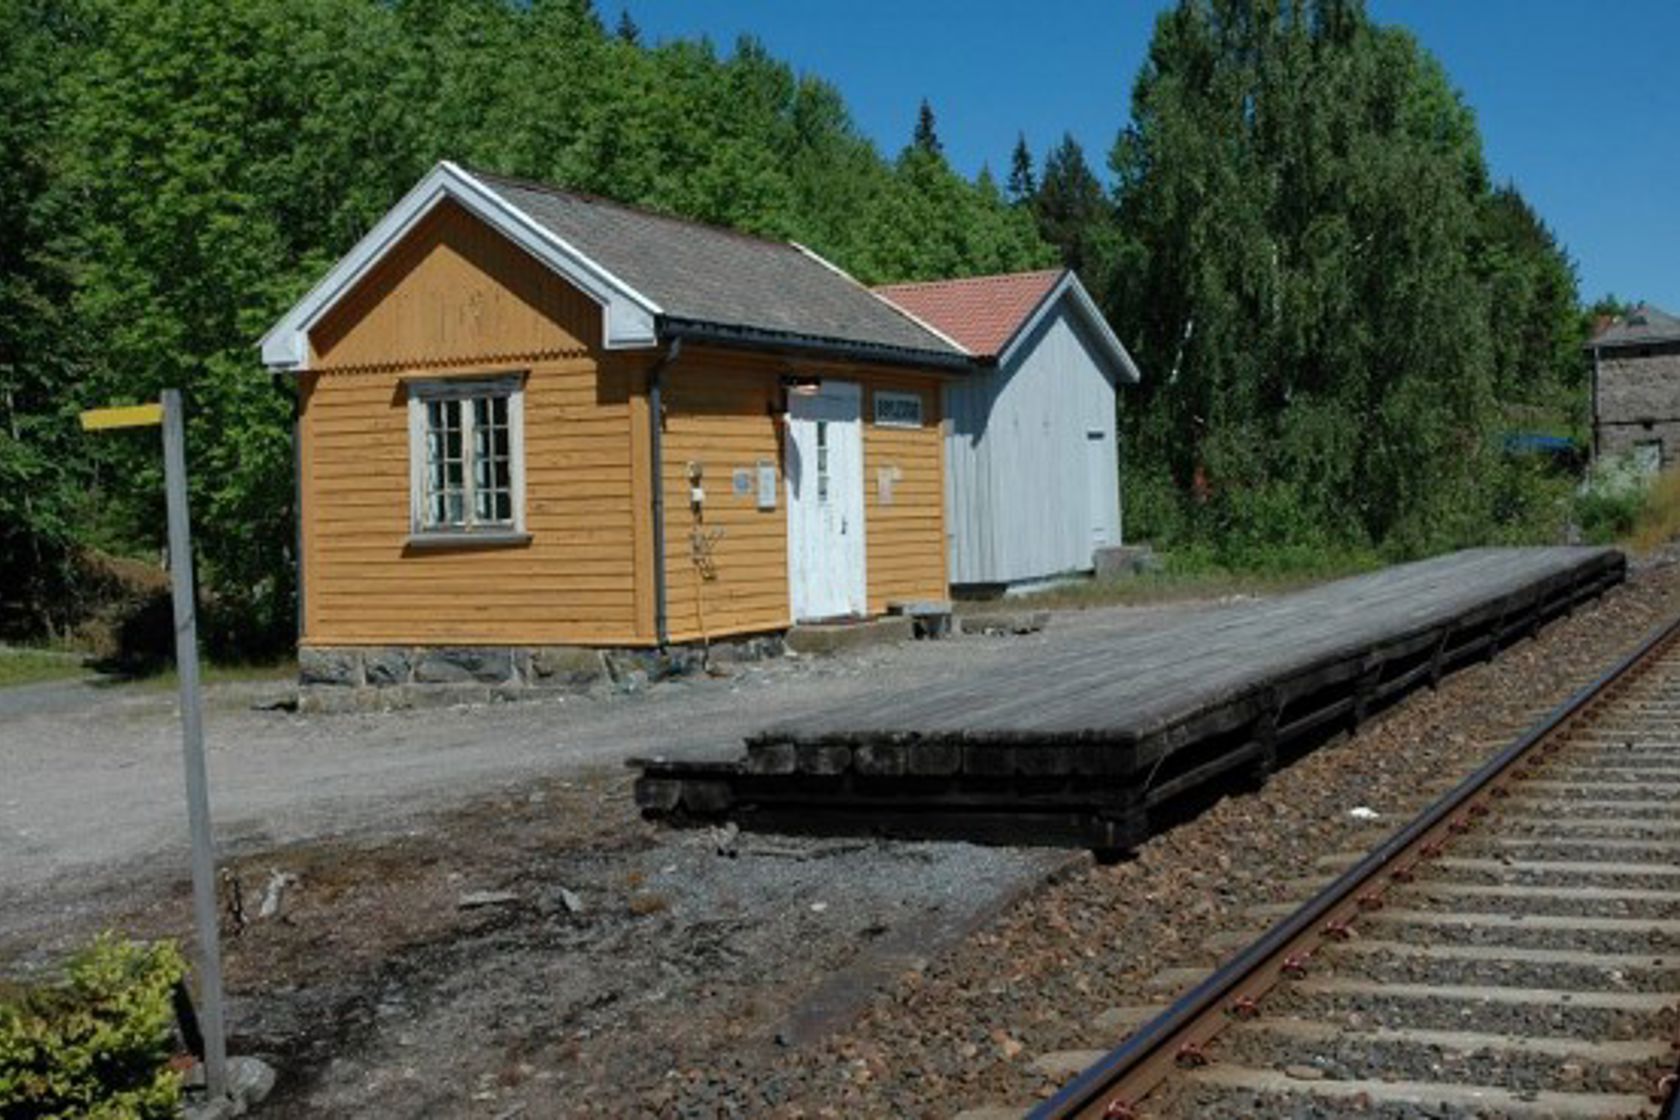 Exterior view of Bøylestad station